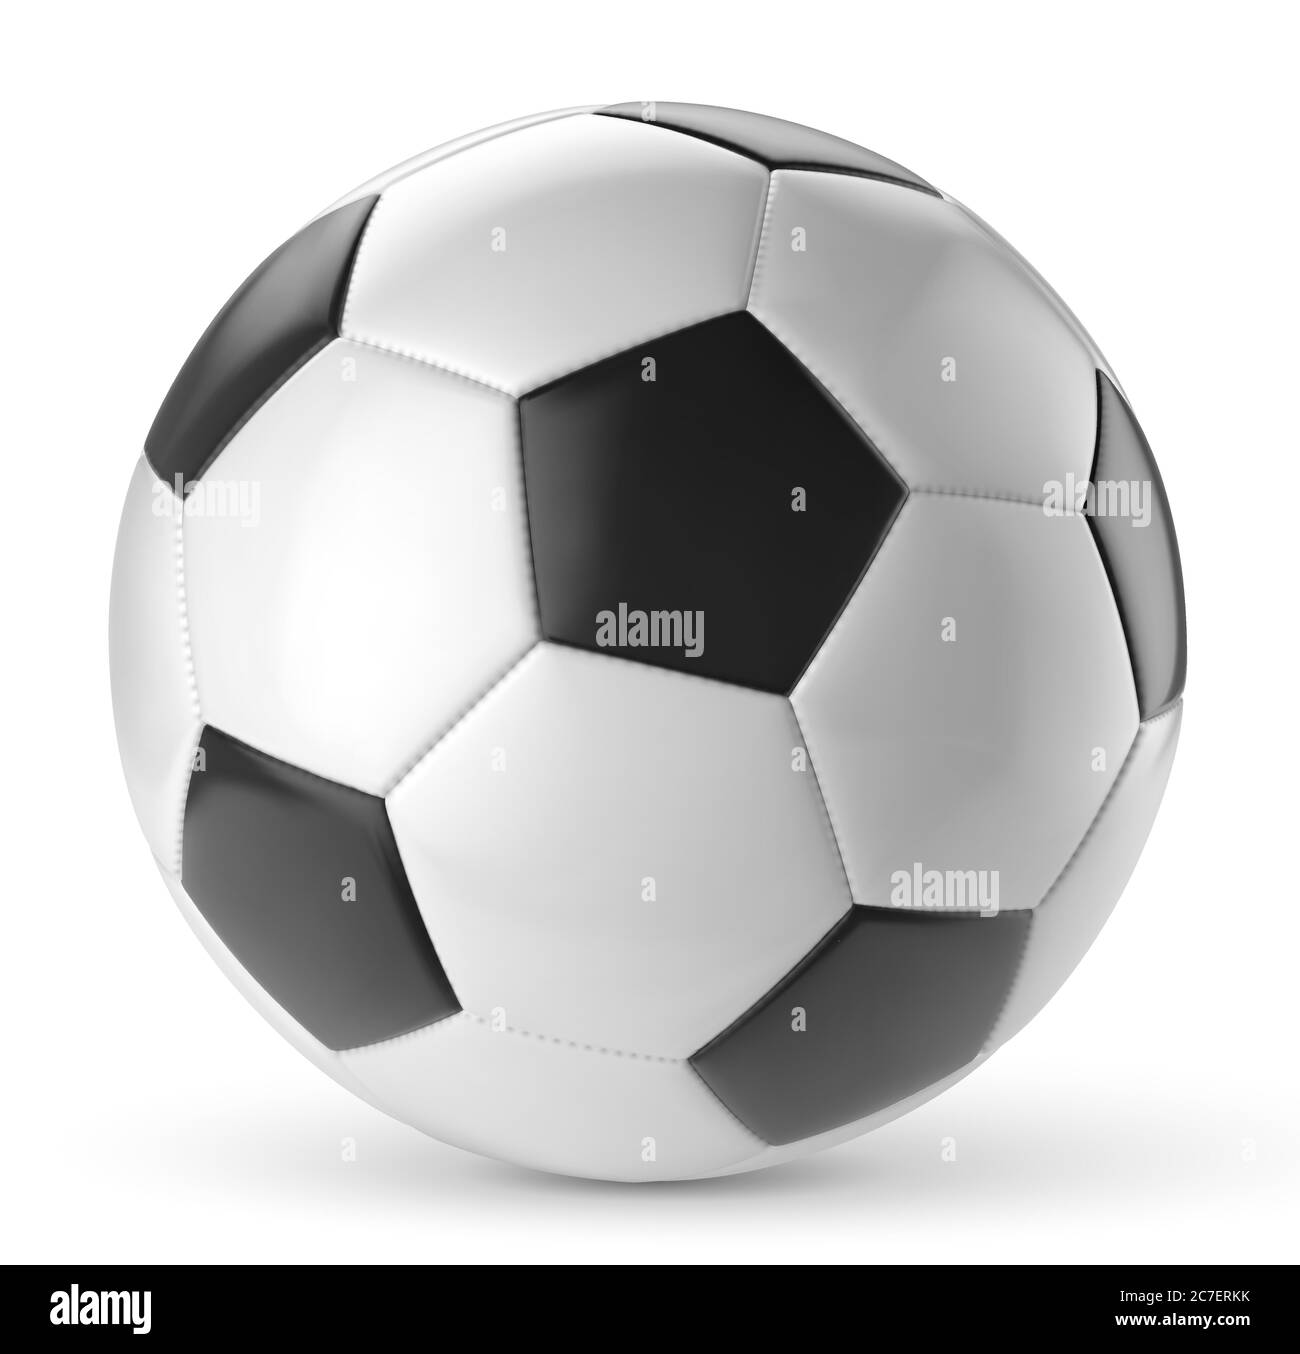 Ballon de football Vector sur fond blanc Illustration de Vecteur